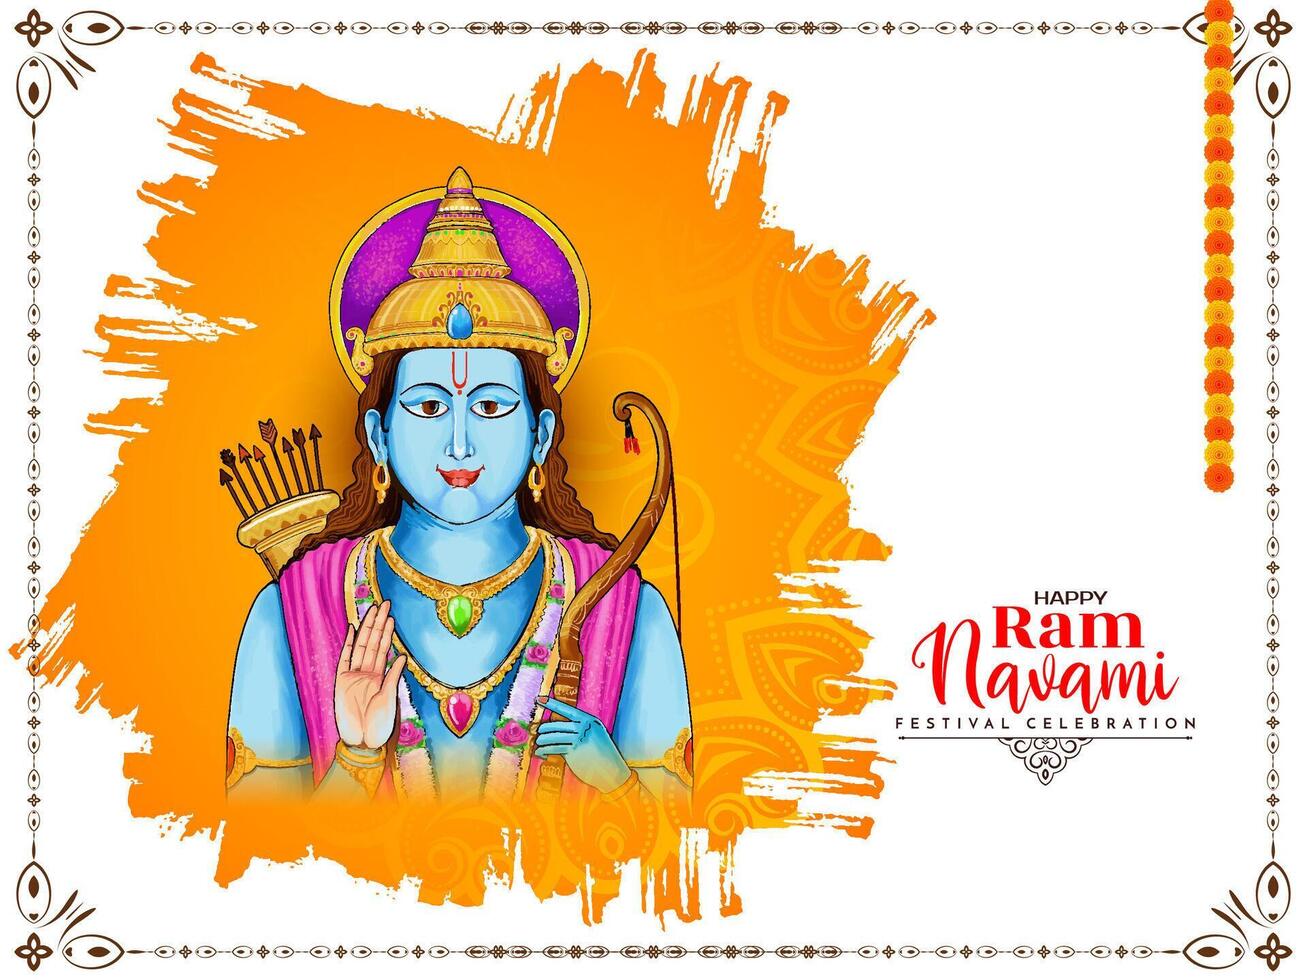 Happy Ram Navami Indian festival celebration background design vector